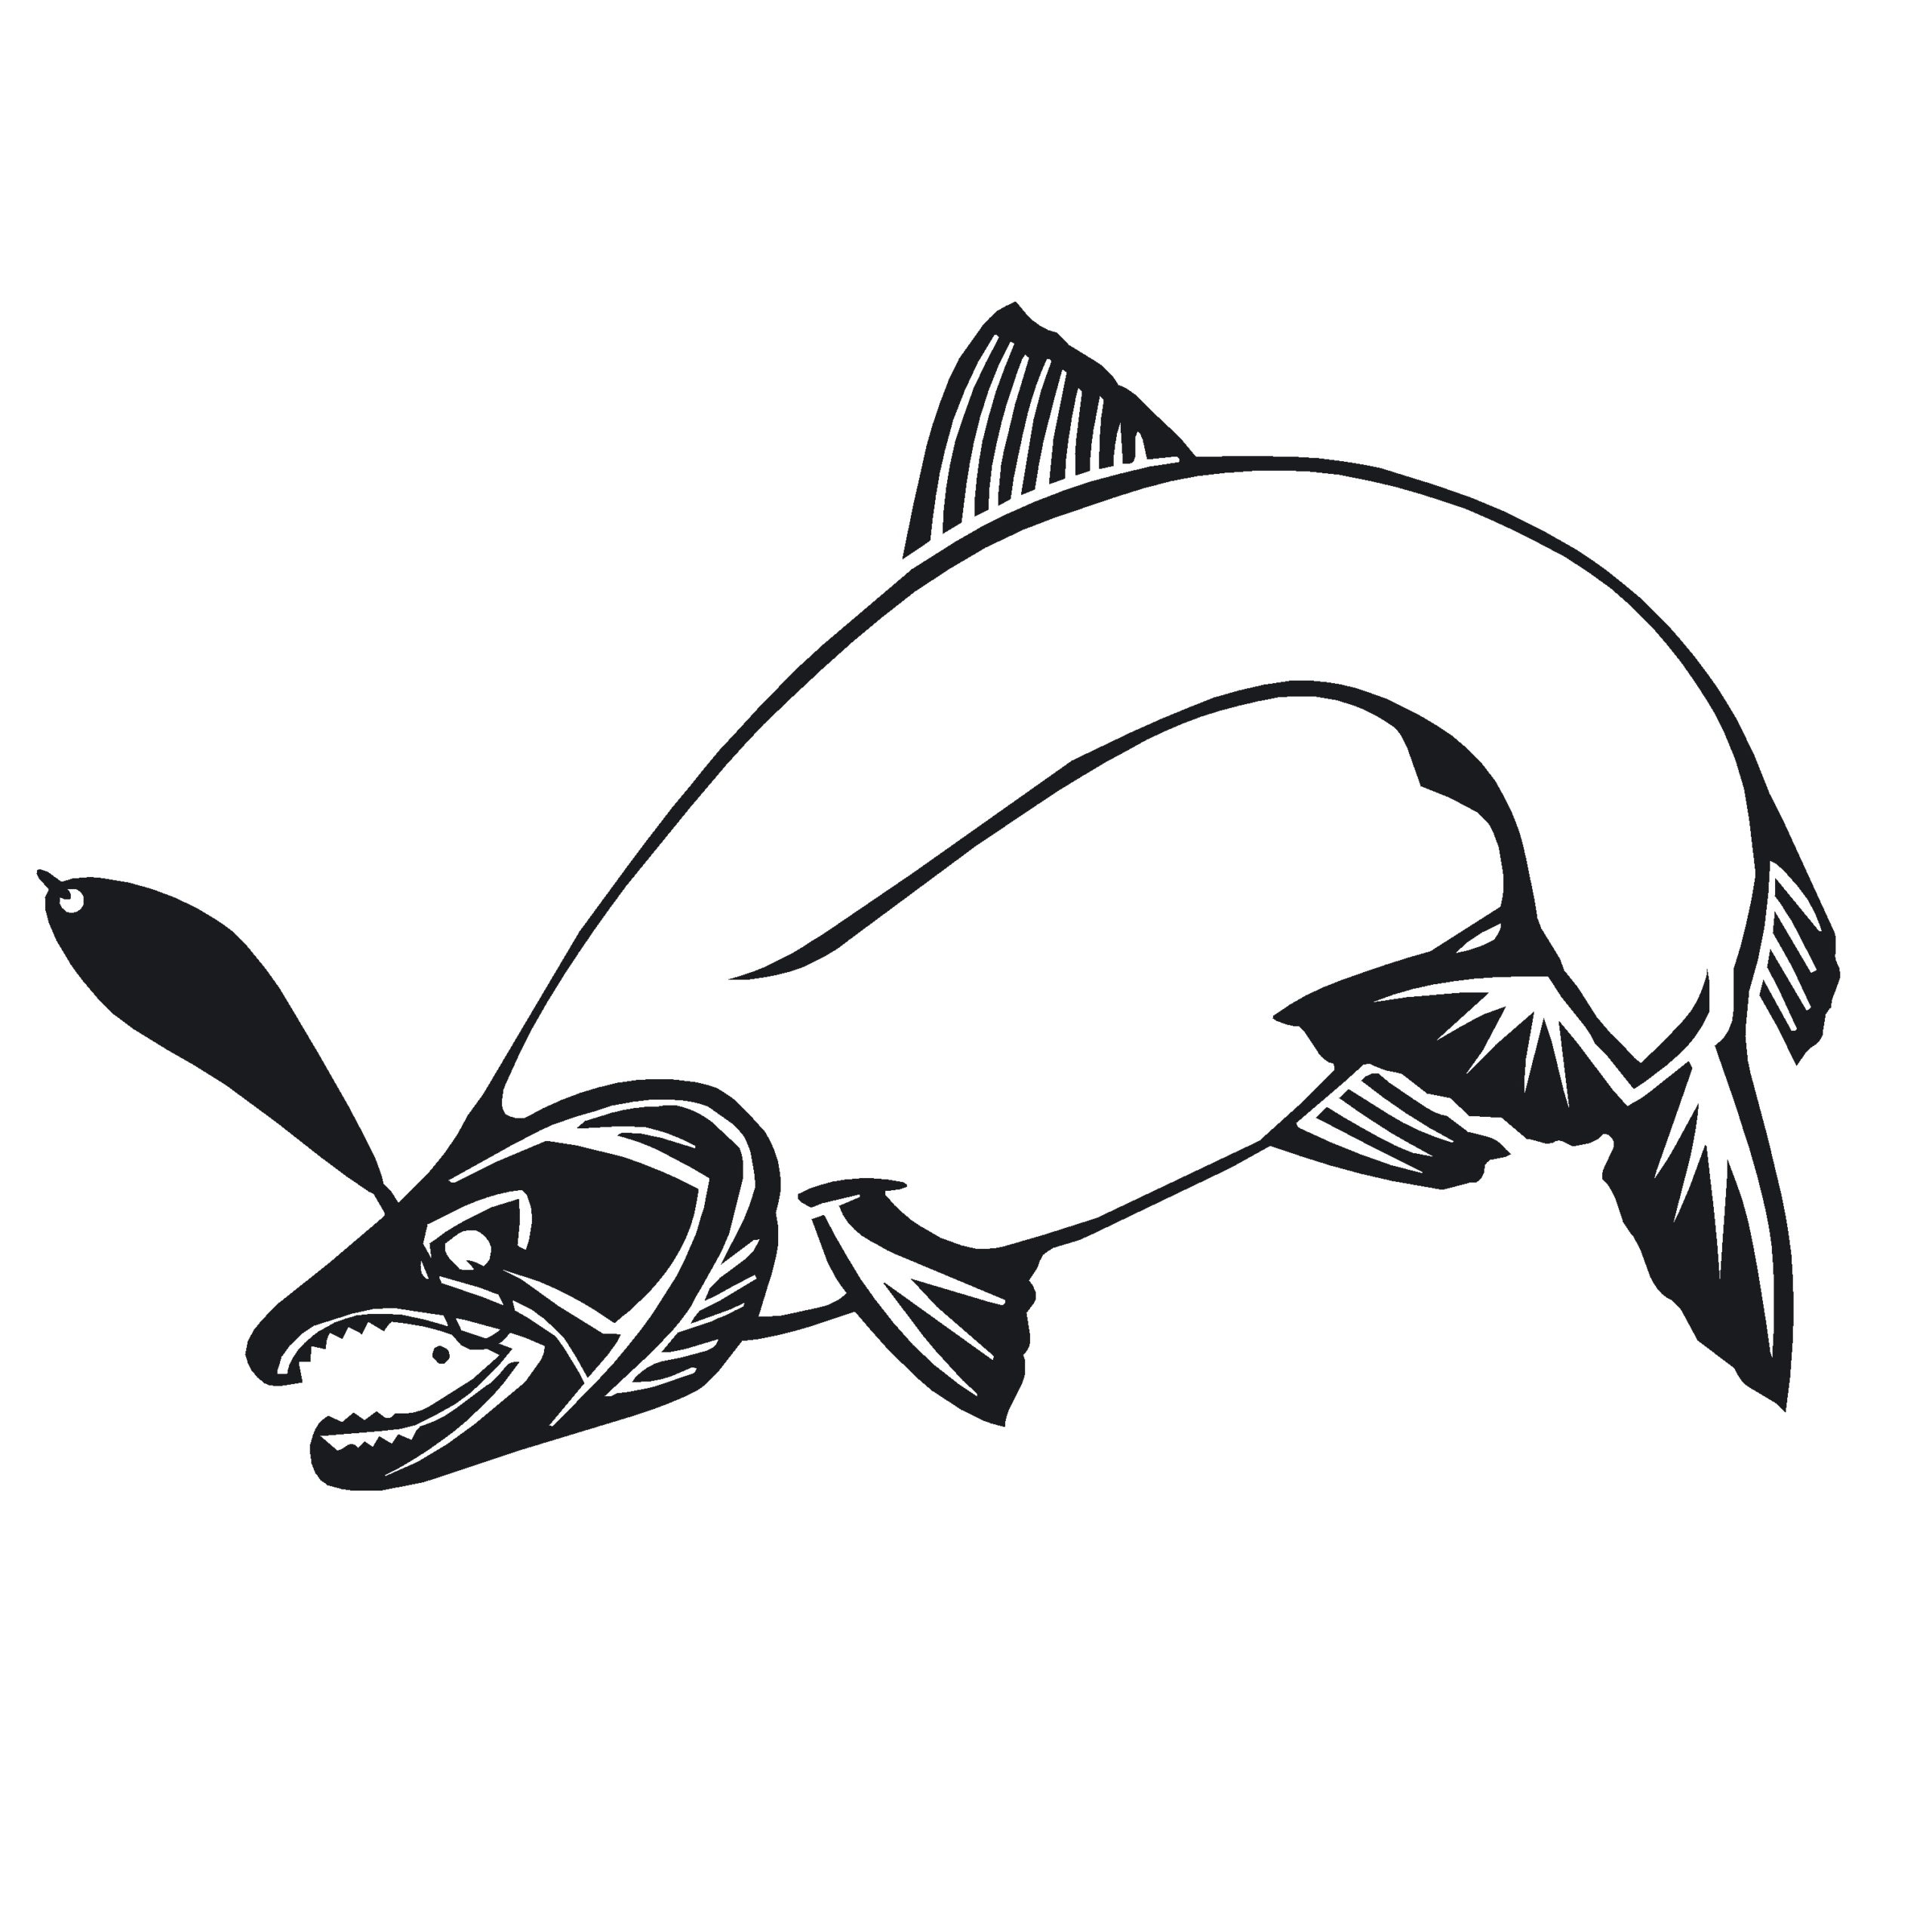 Salmon Fishing Decal - Salmon Fishing Sticker - 2210